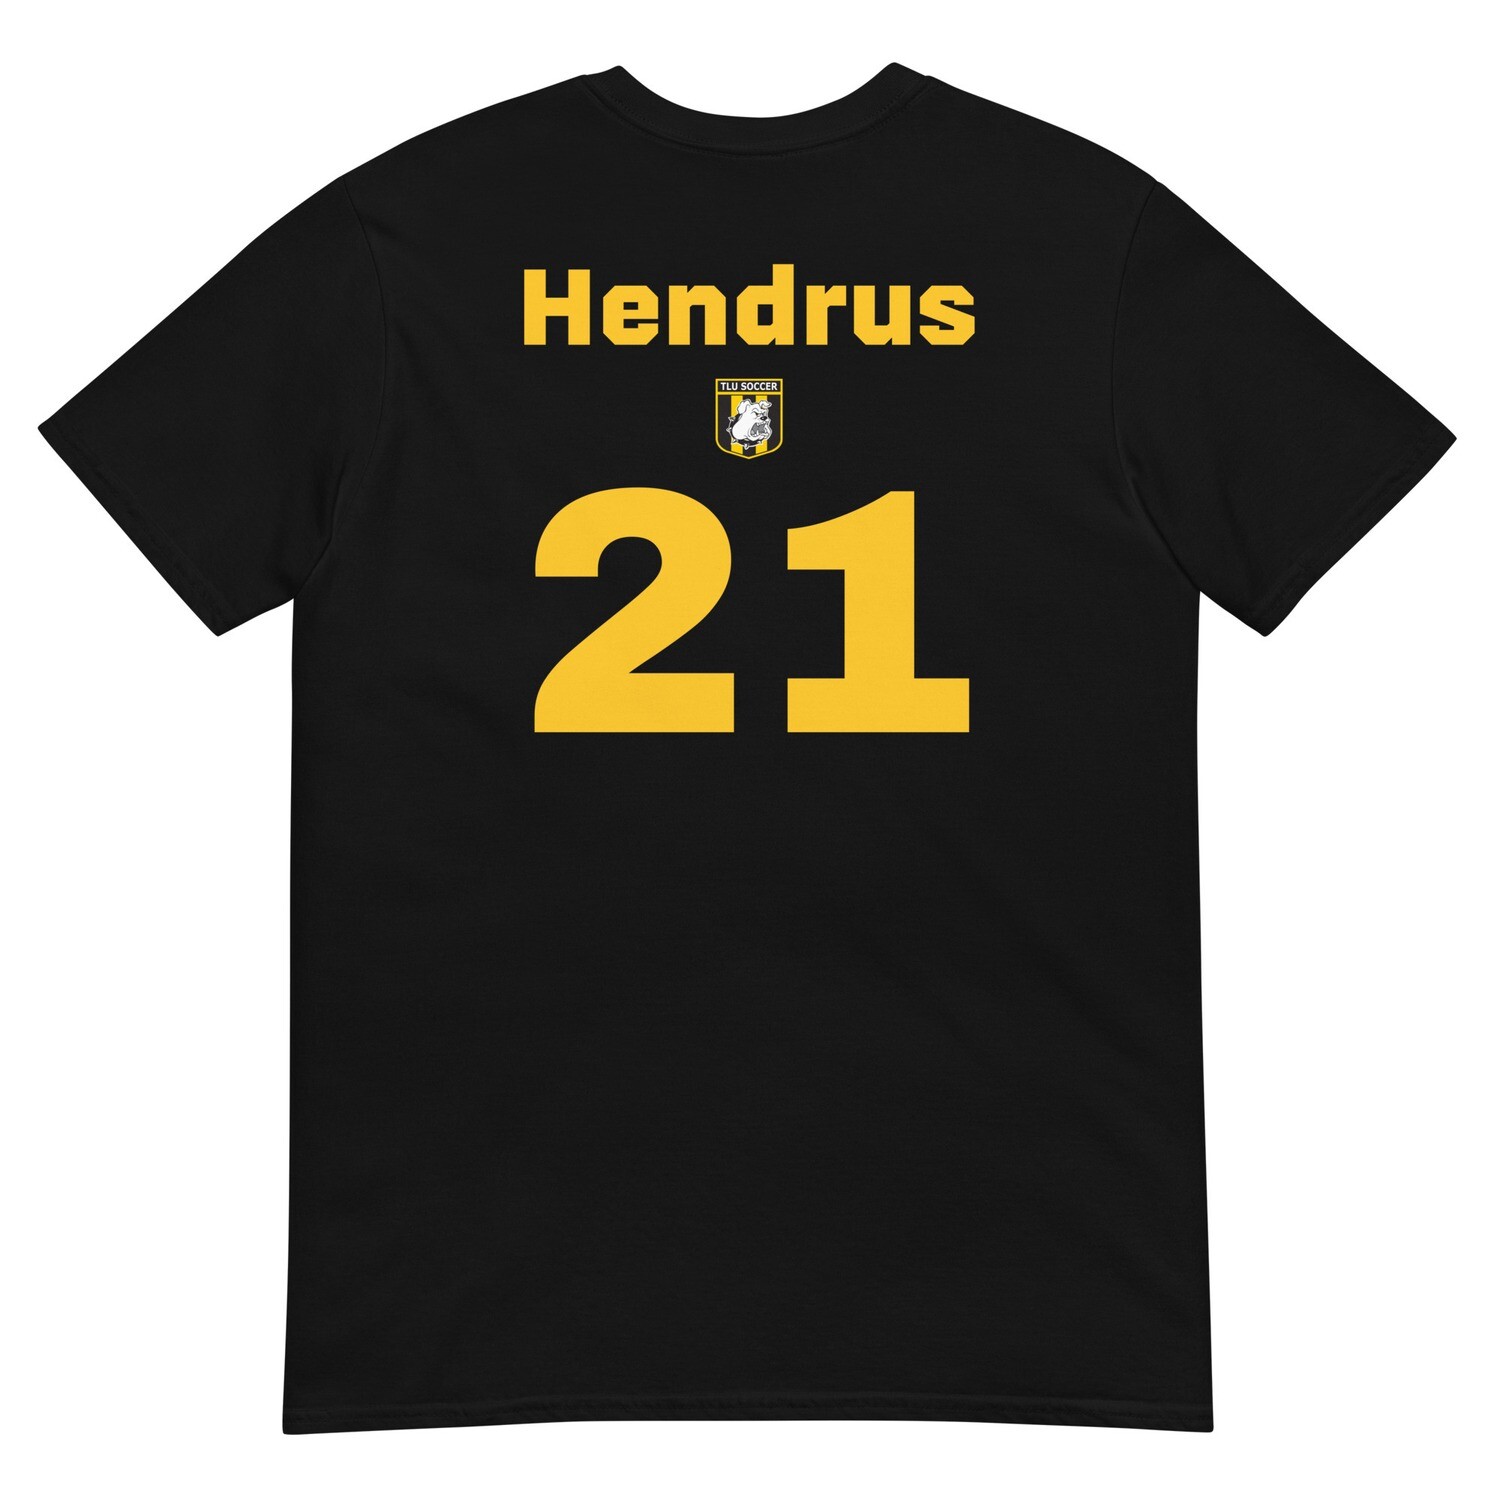 Number 21 Hendrus Short-Sleeve Unisex T-Shirt